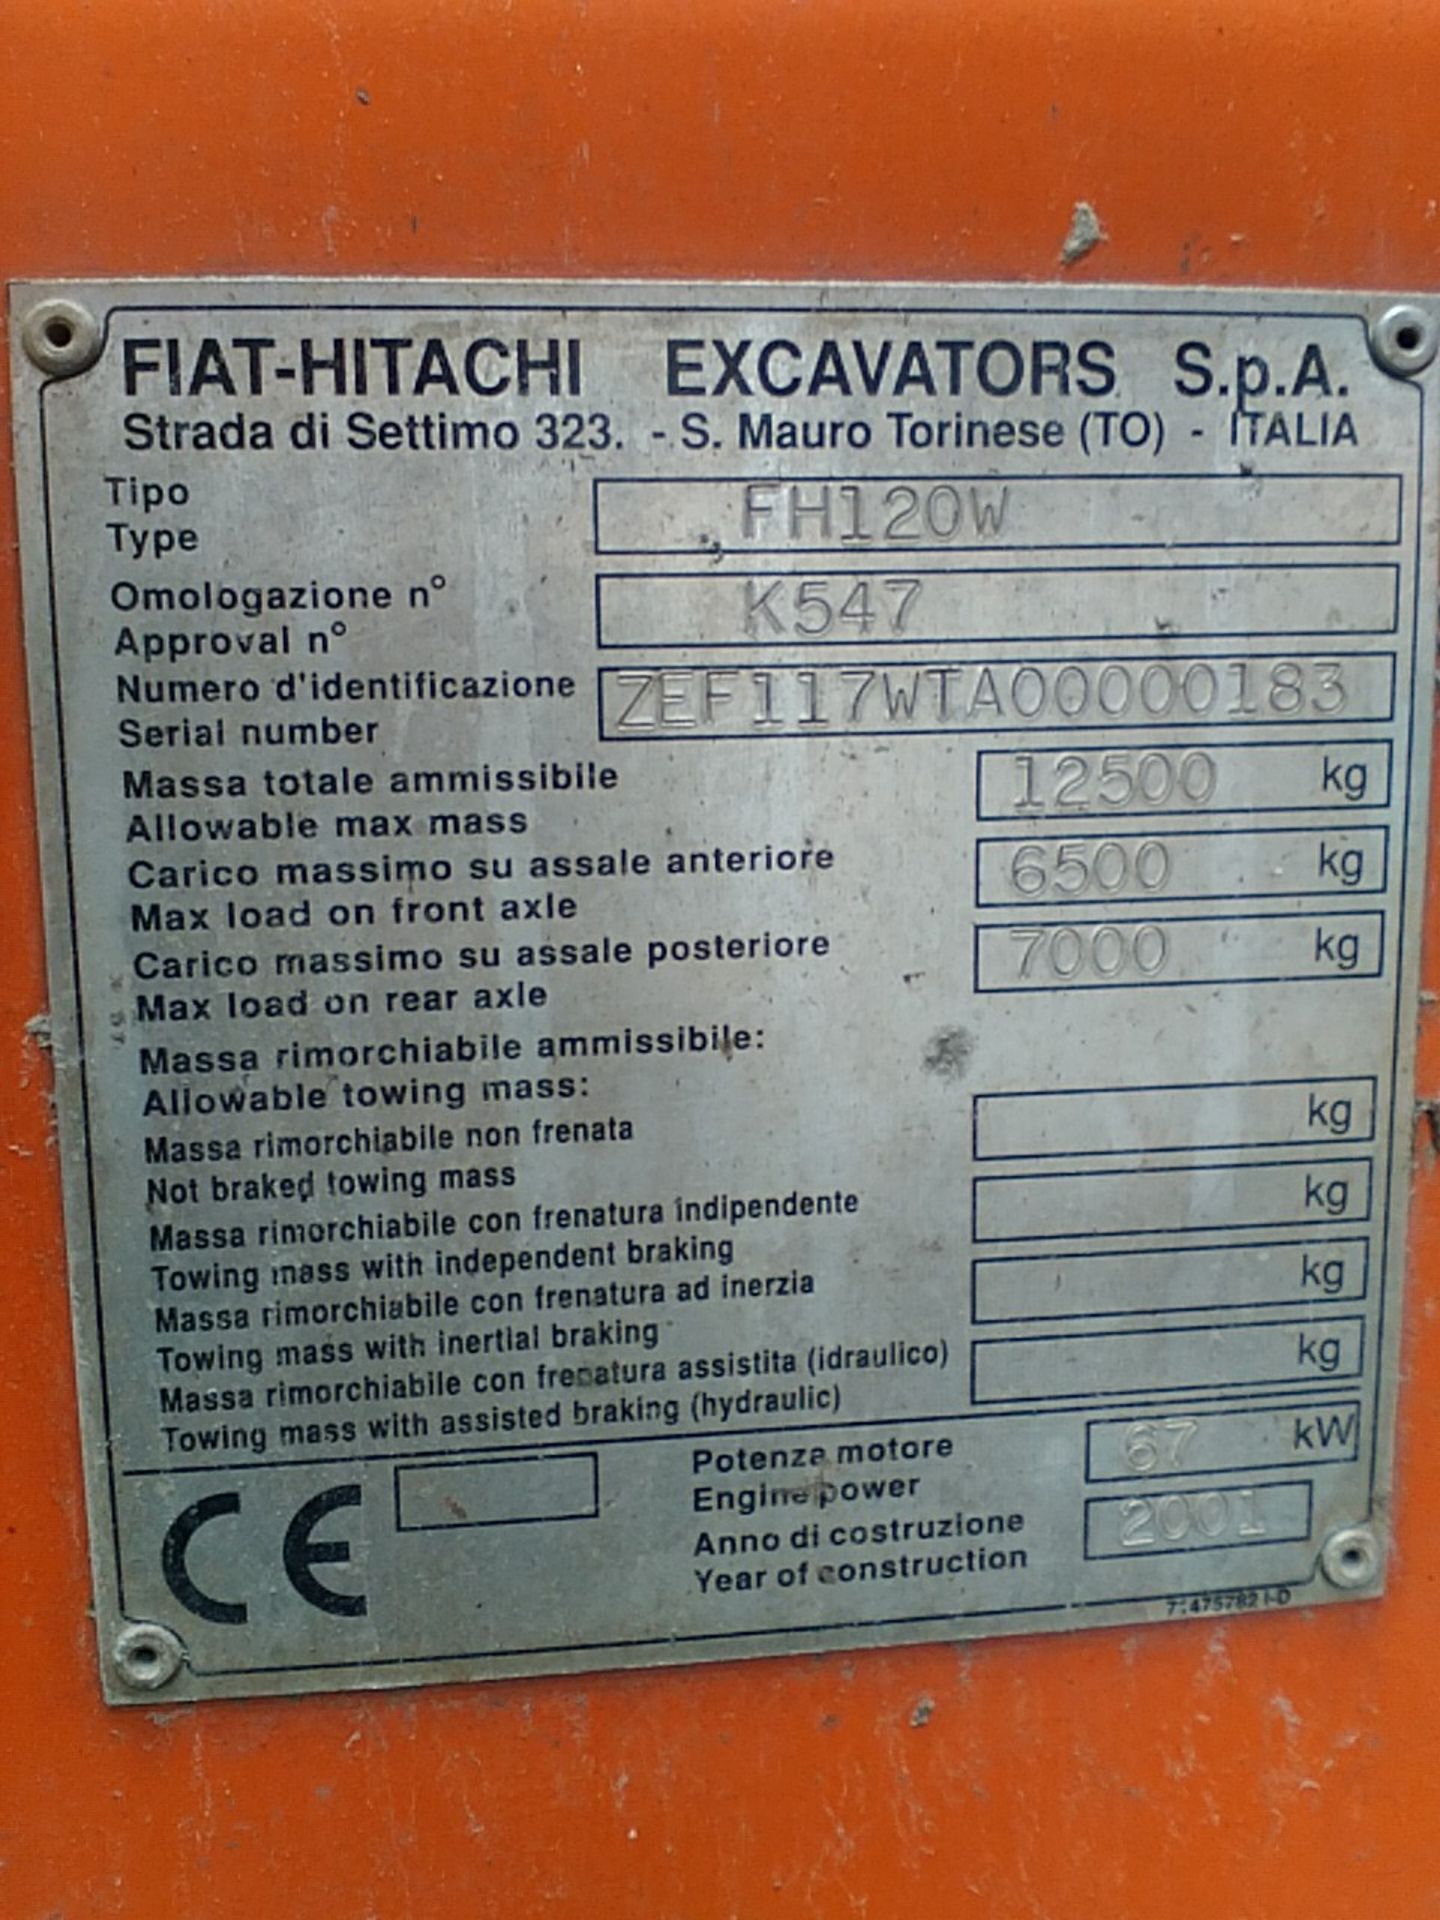 FIAT-HITACHI FH120W - Image 3 of 15